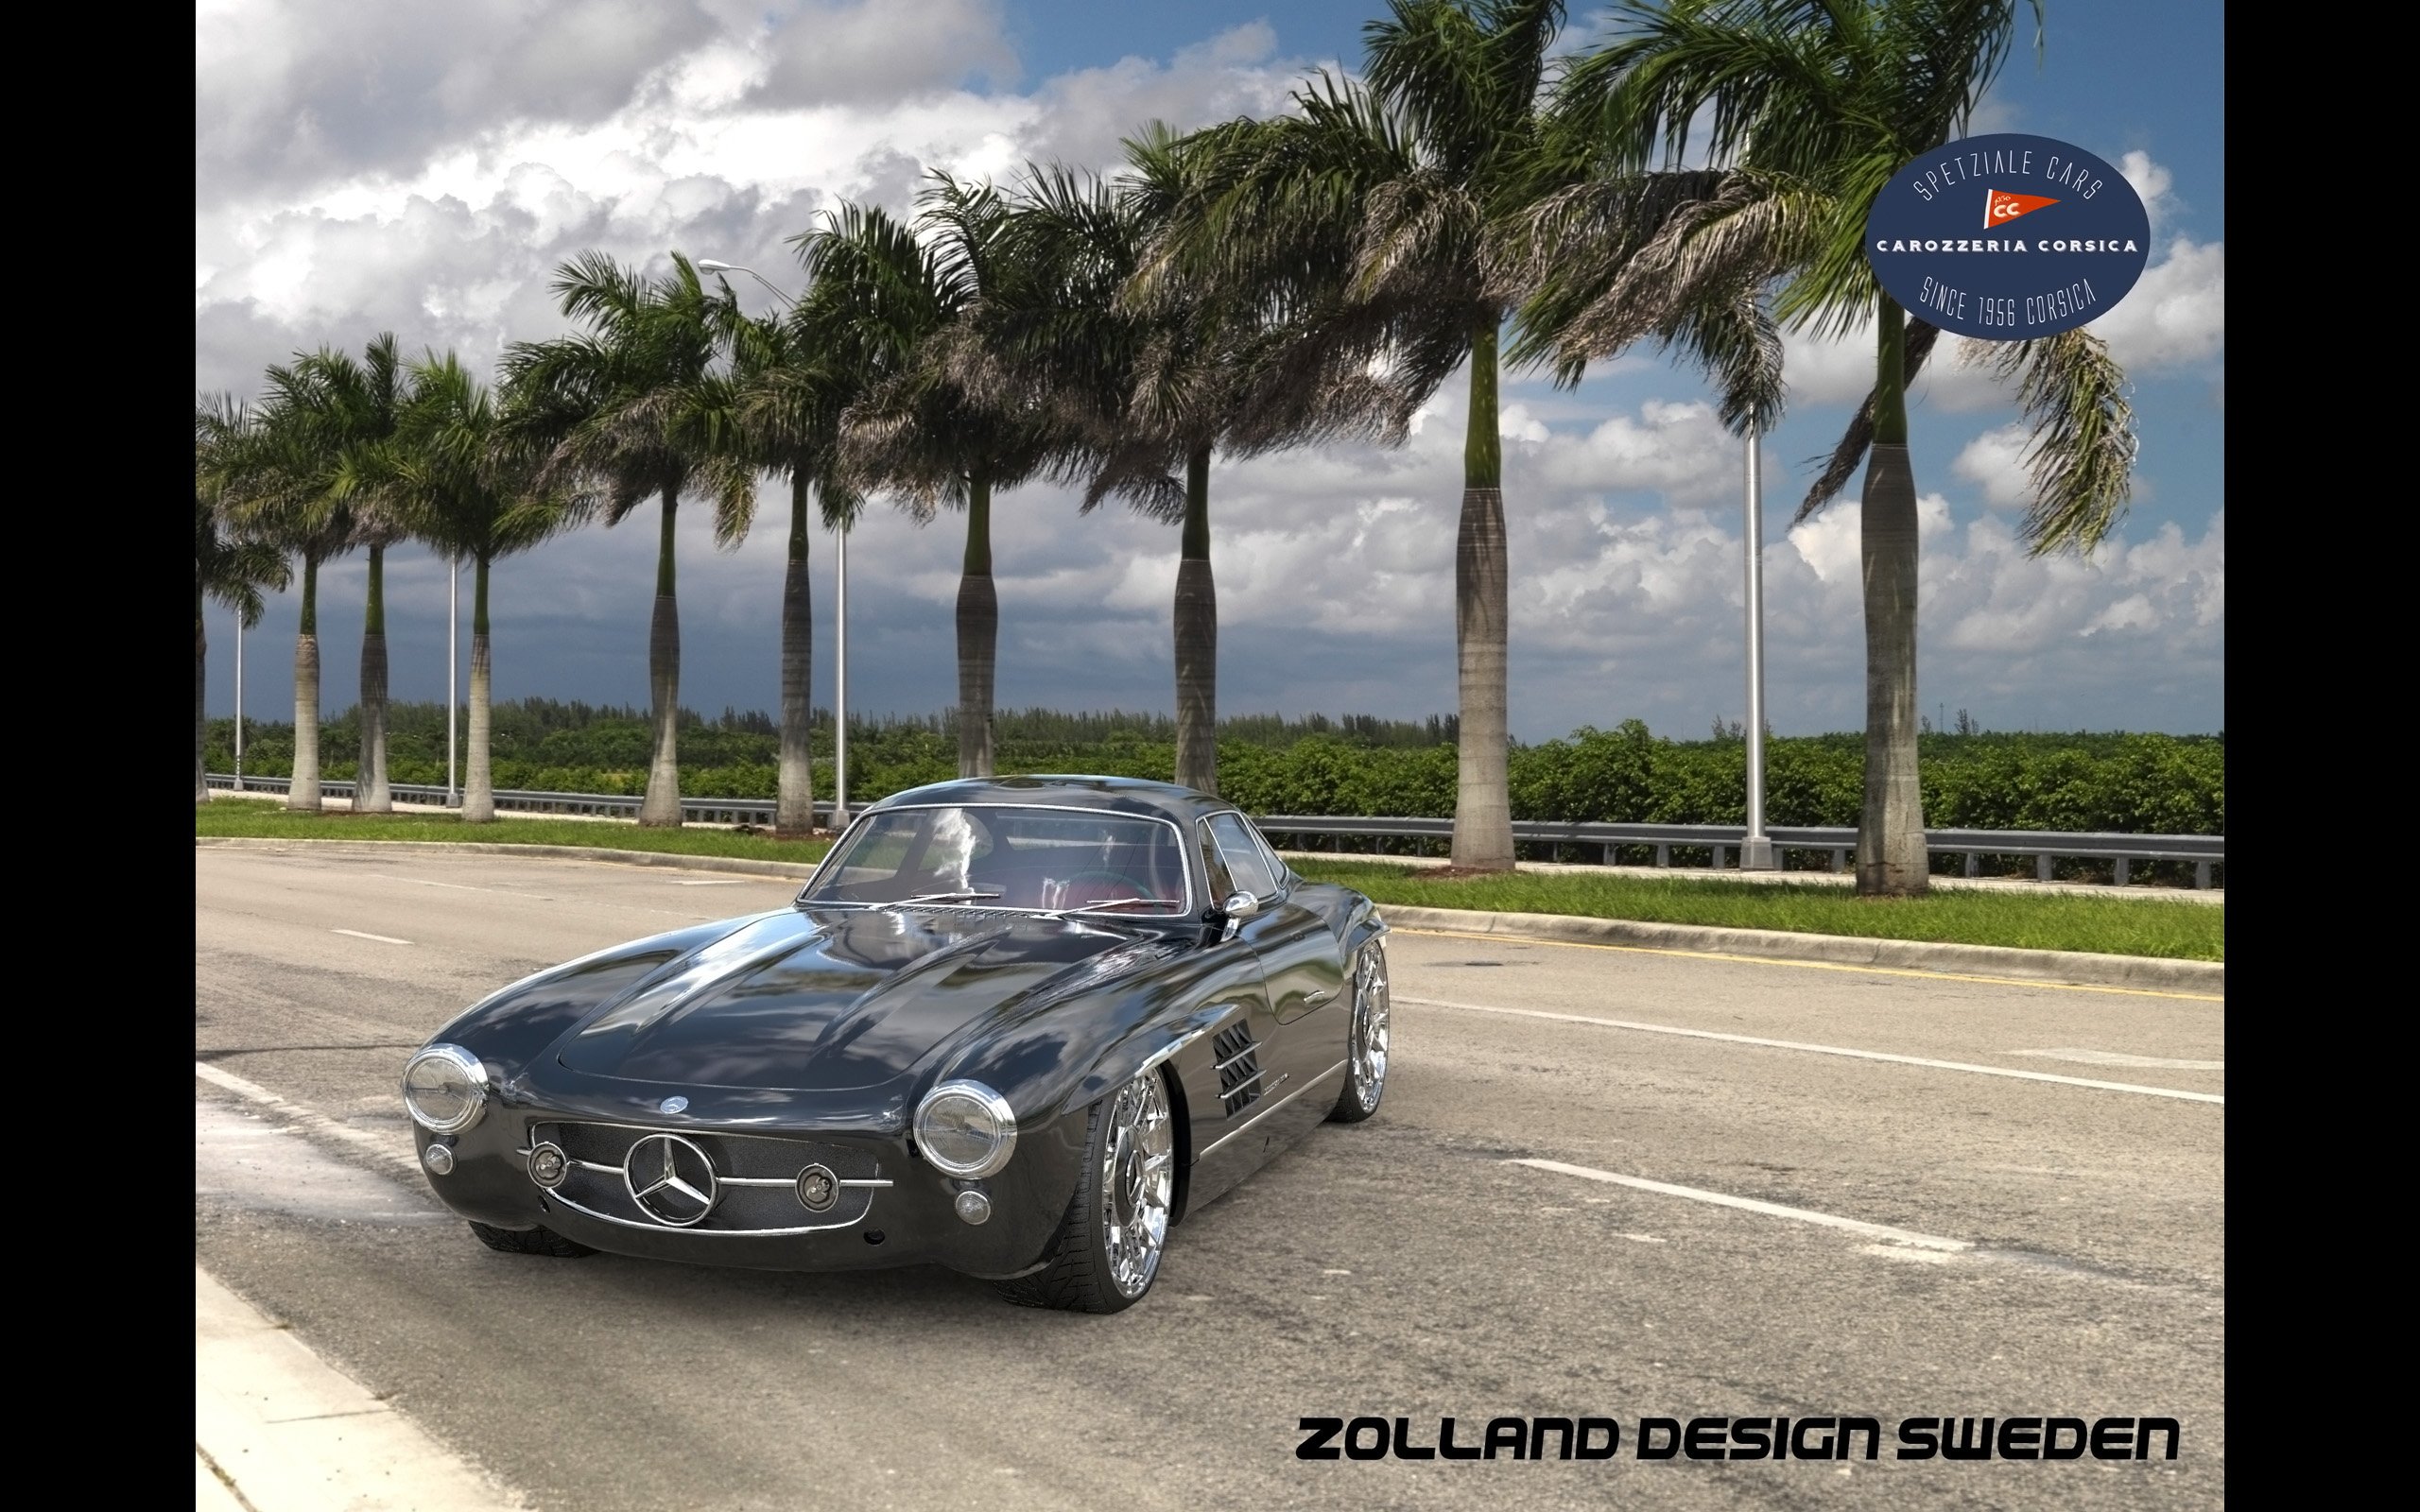 2015, Zolland design, Mercedes, Benz, 300sl, Supercar, Tuning, 300 Wallpaper